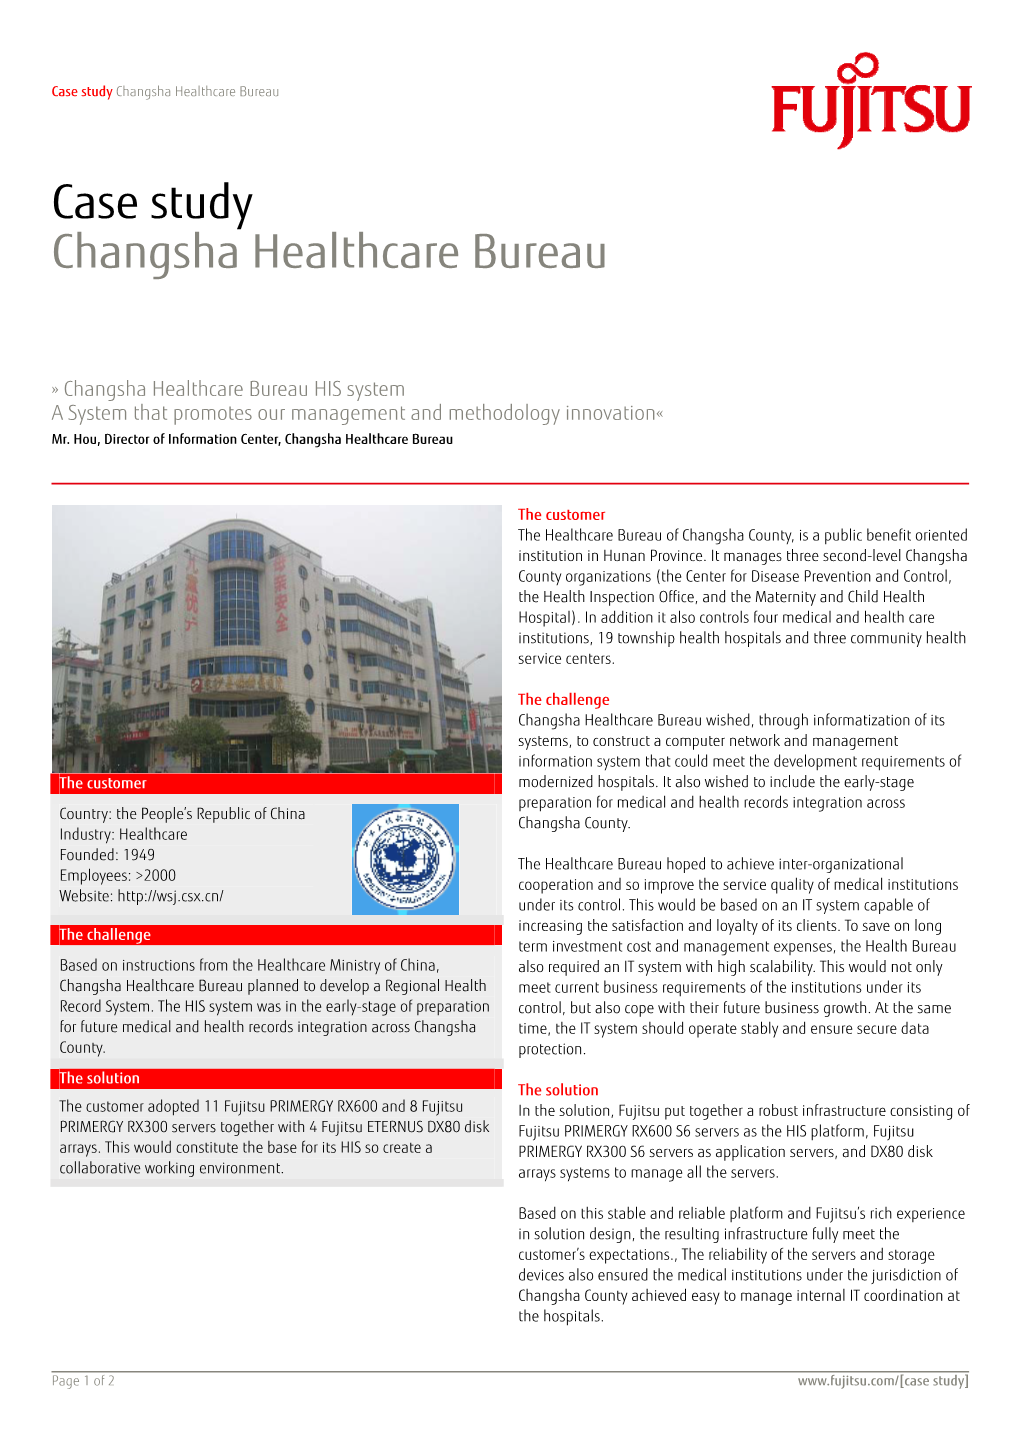 Case Study Changsha Healthcare Bureau